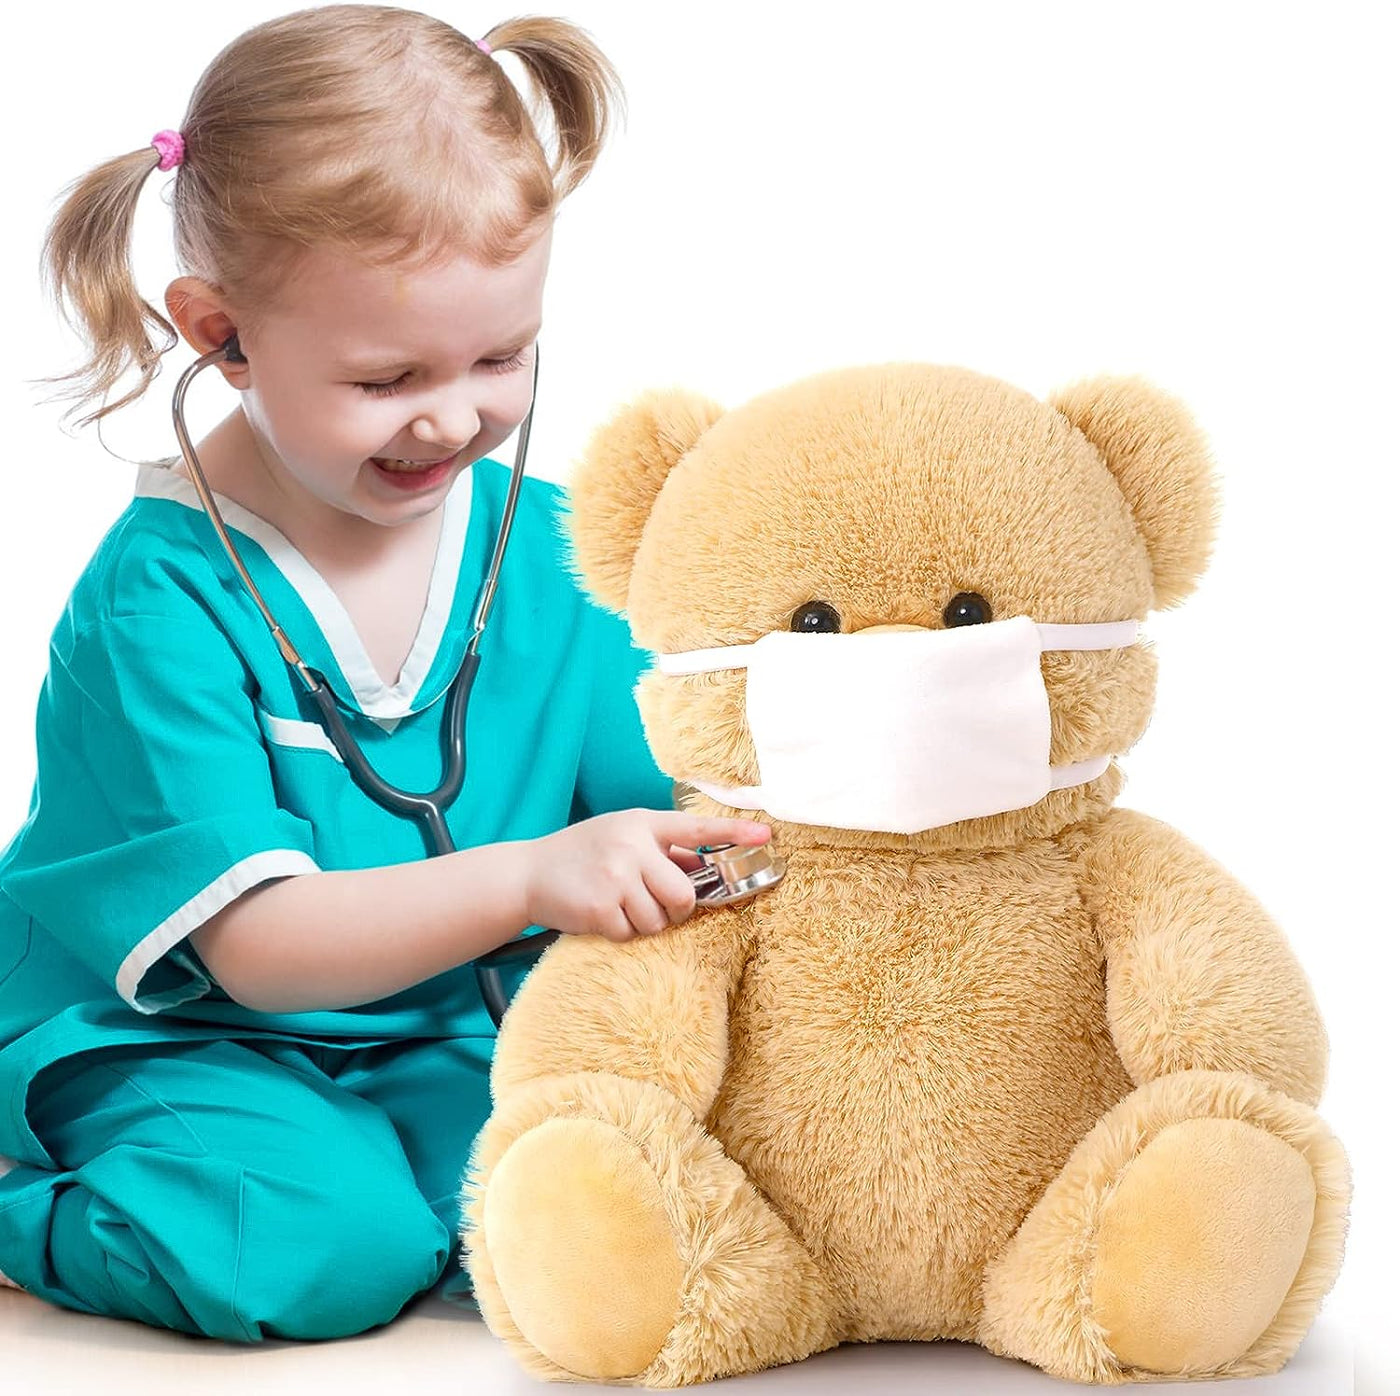 Get Well Soon Teddy Bear Stuffed Animal, 18 Inches